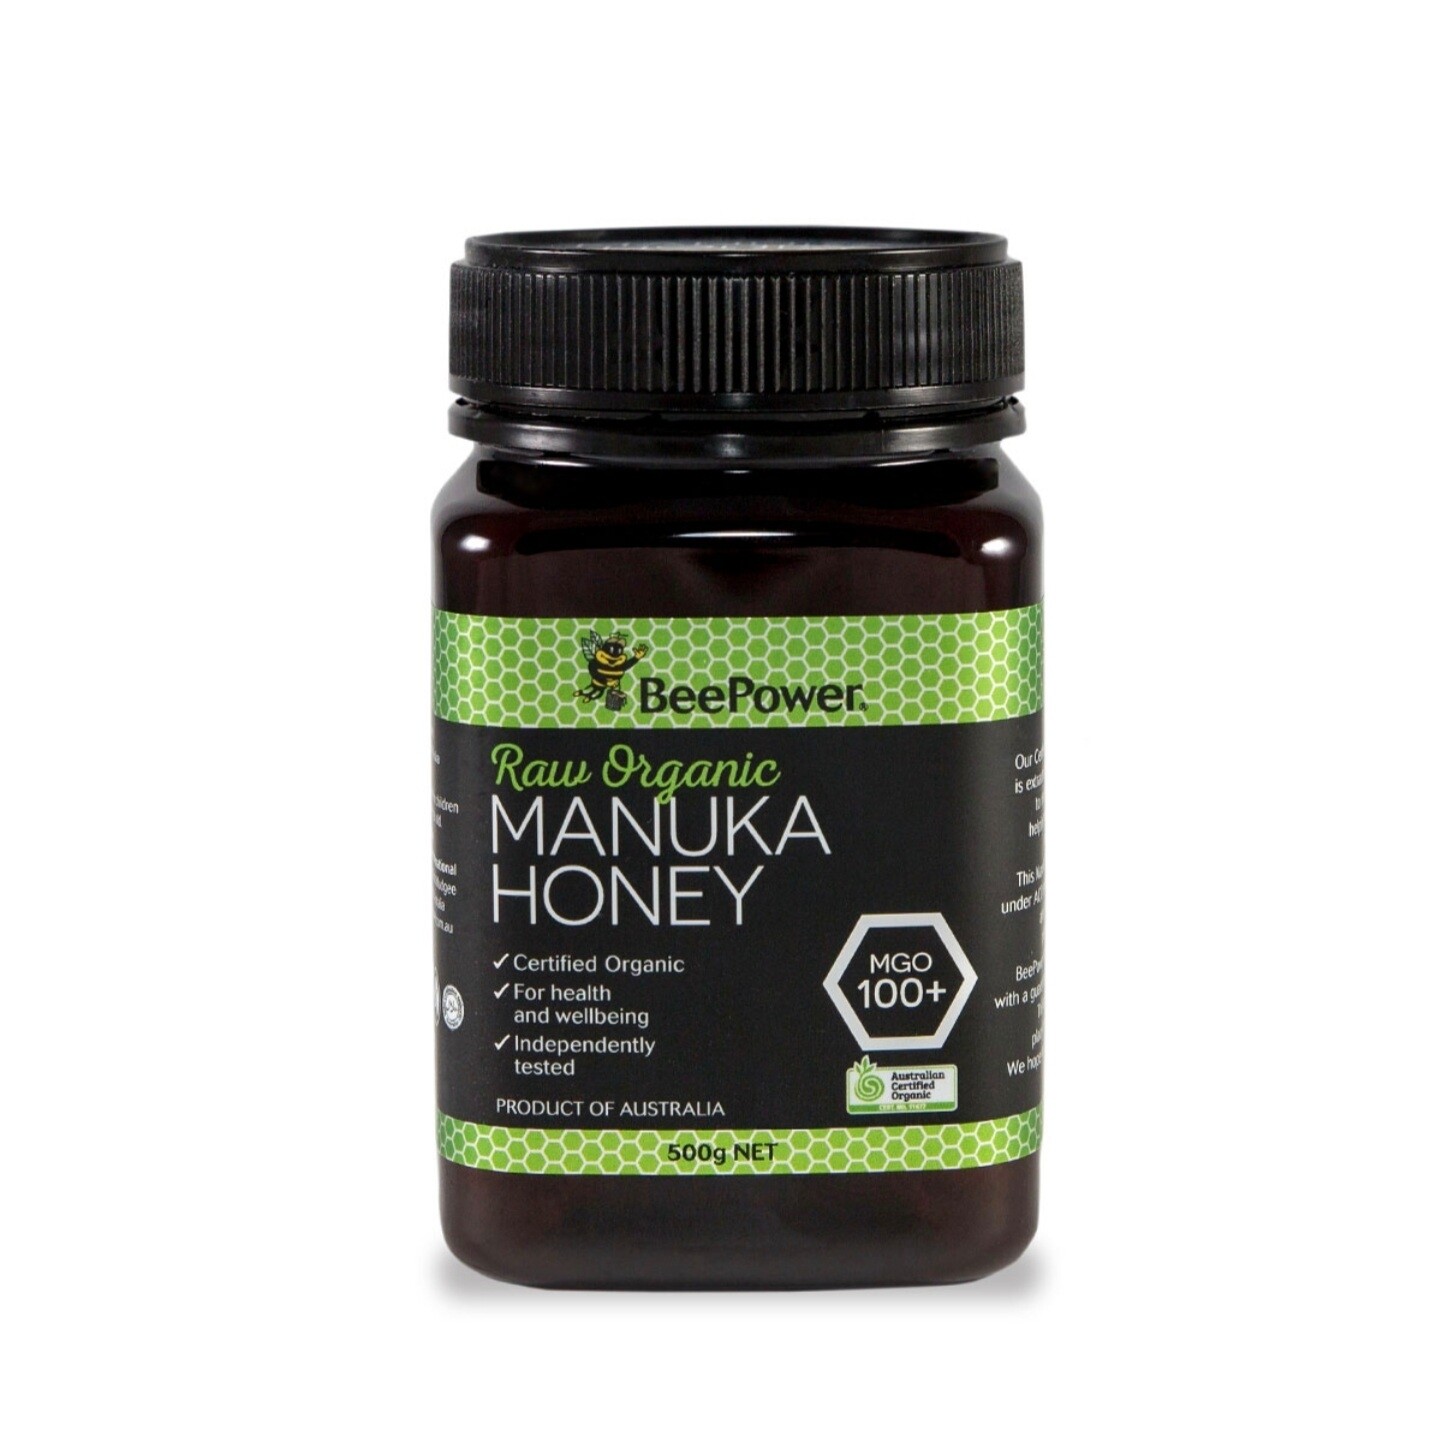 Bee Power Raw Organic Manuka Honey MGO 100+ 500g